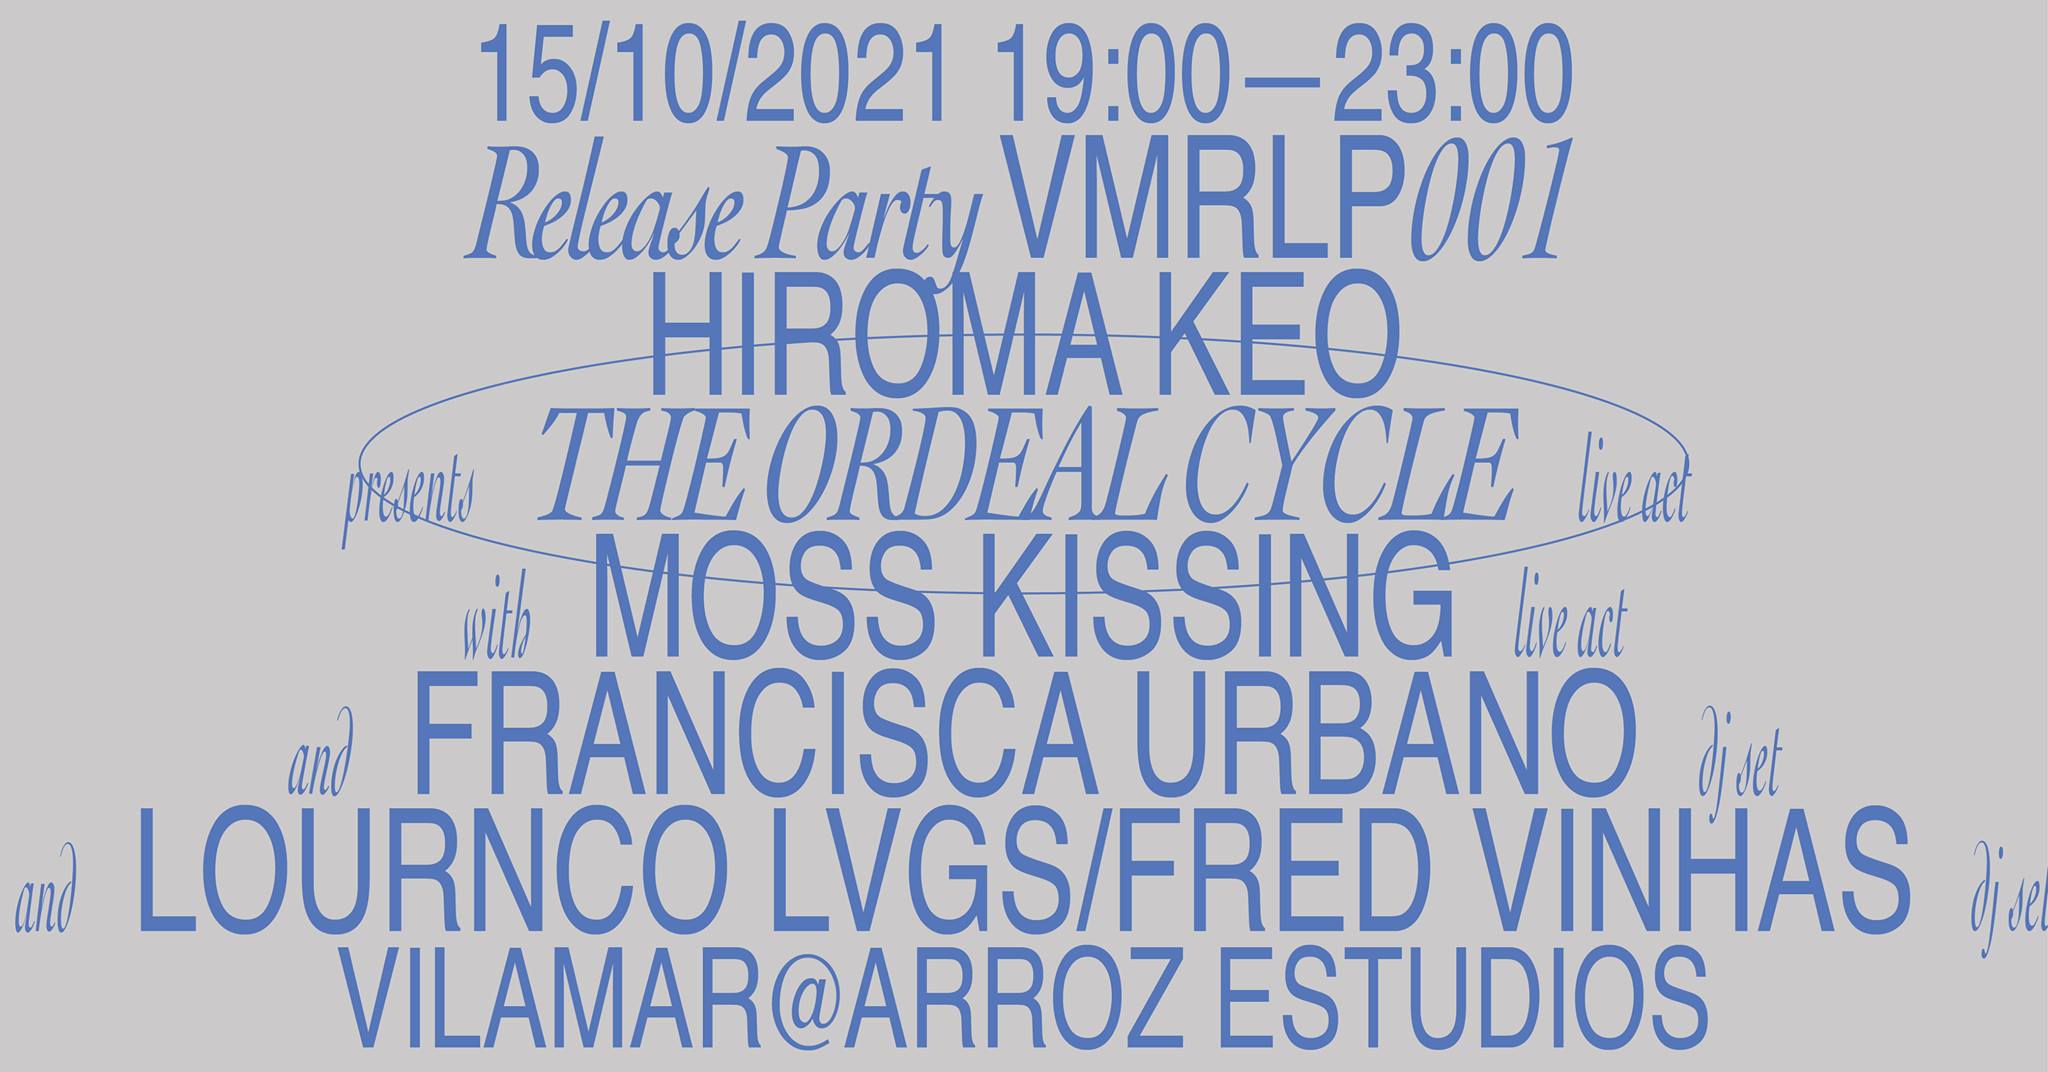 Vilamar Records Release Party